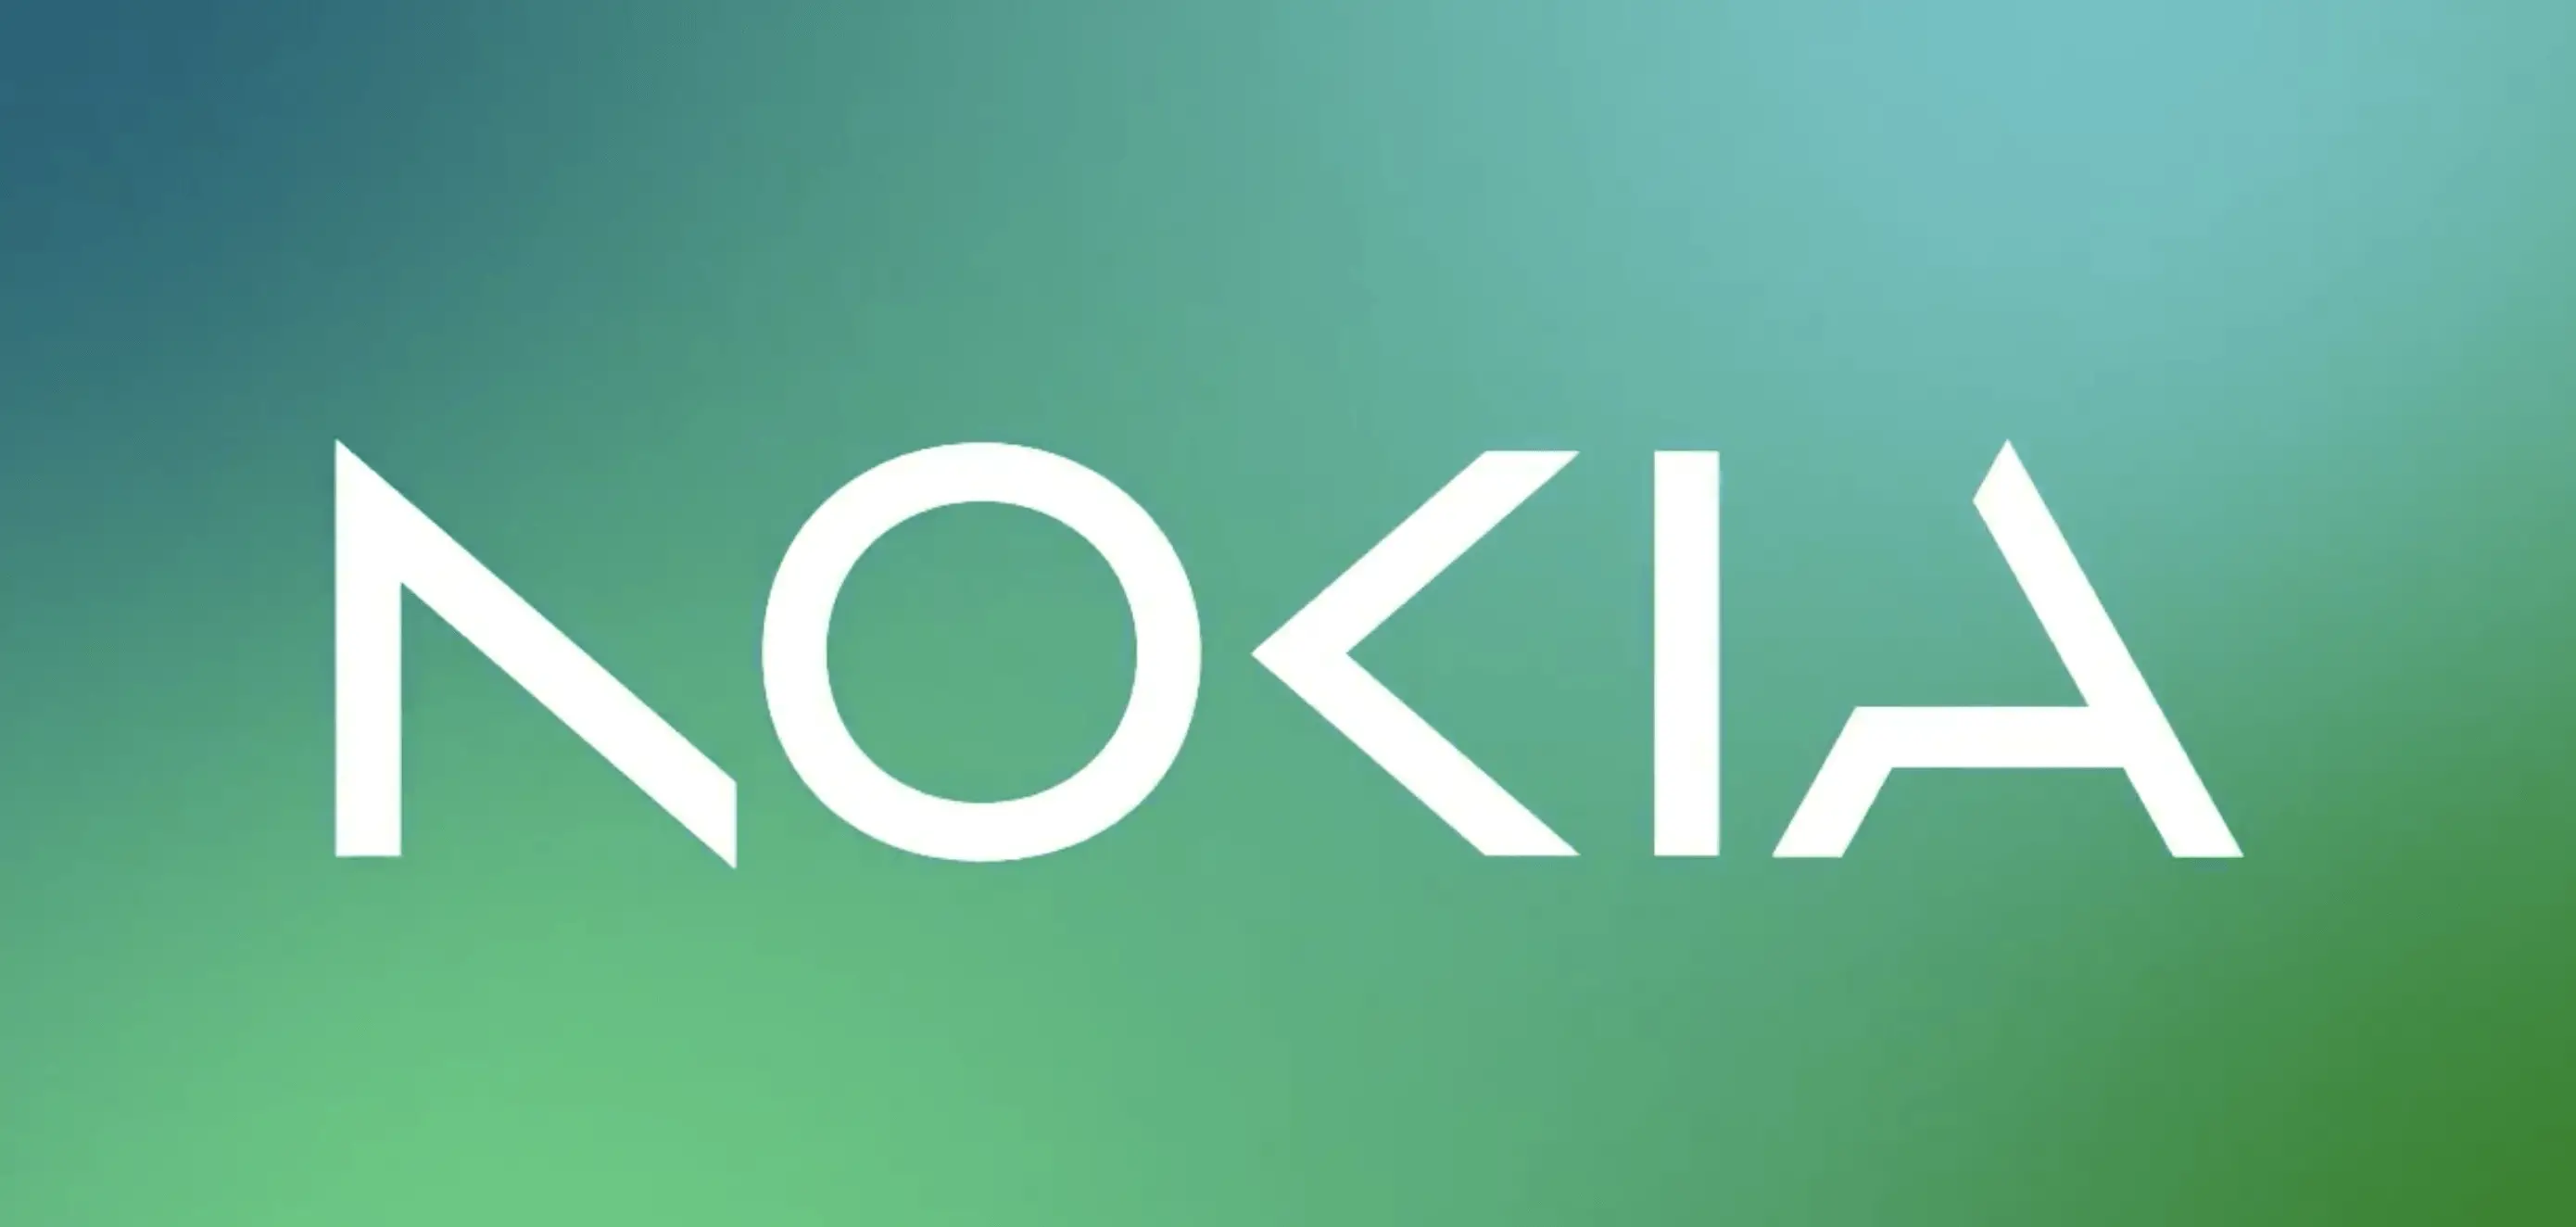 Nokia Unobtrusively Backtracks on Pure UI Presentation